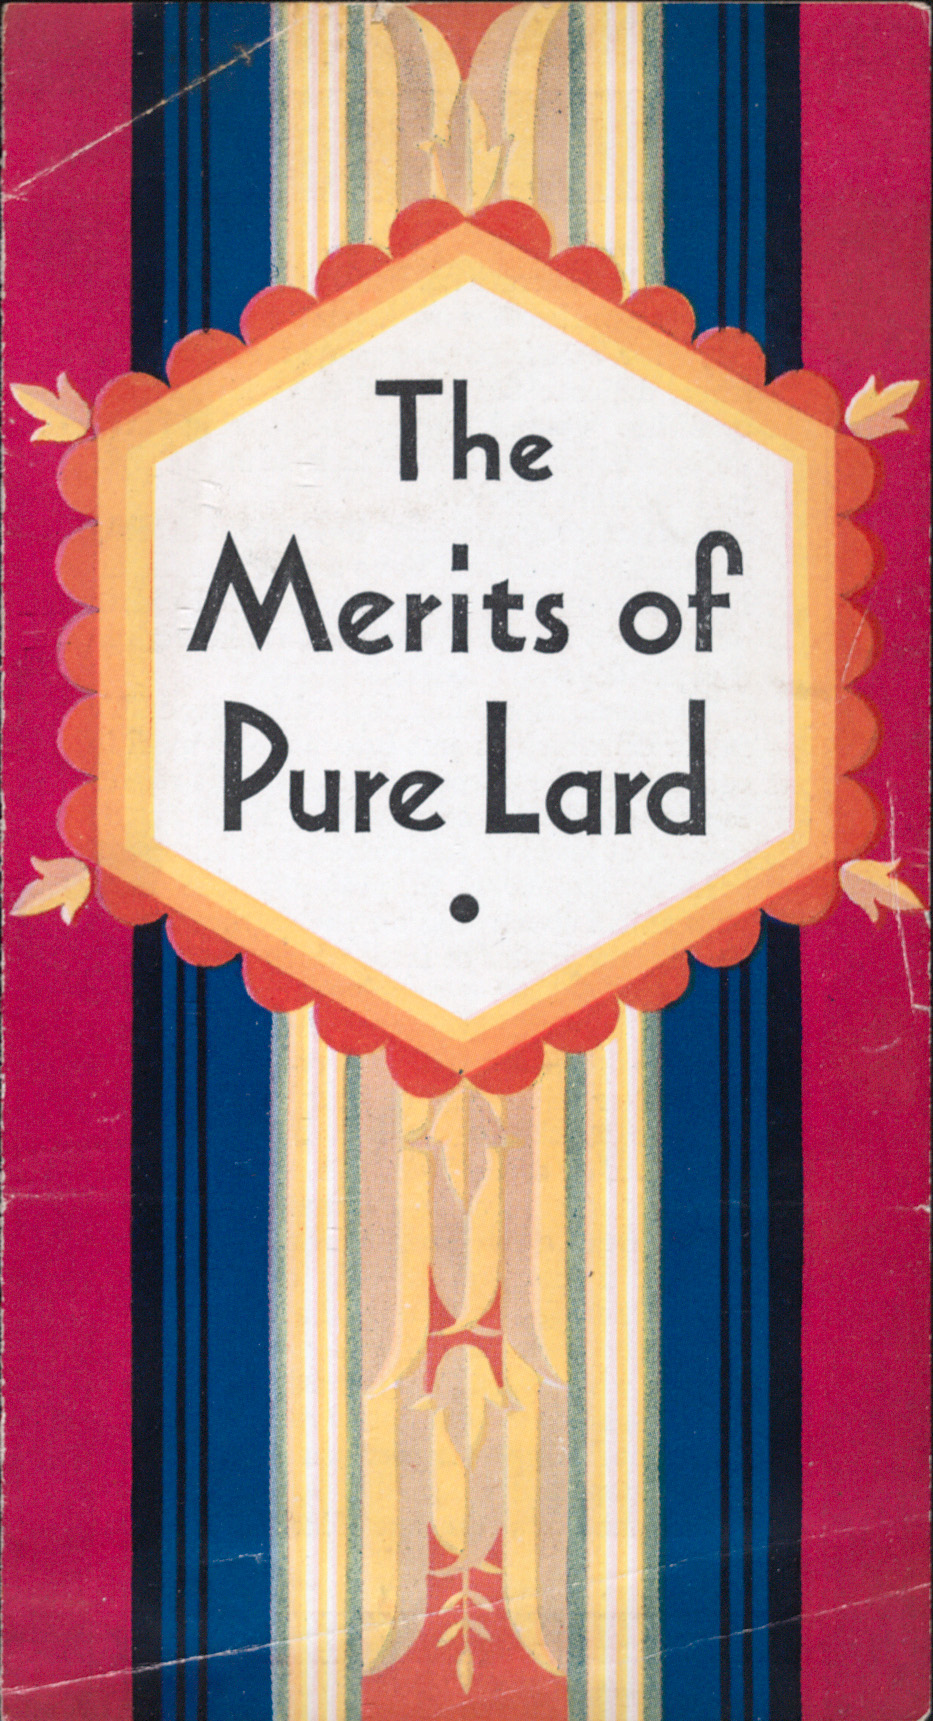 Merits of Pure Lard. No publisher, n.d.